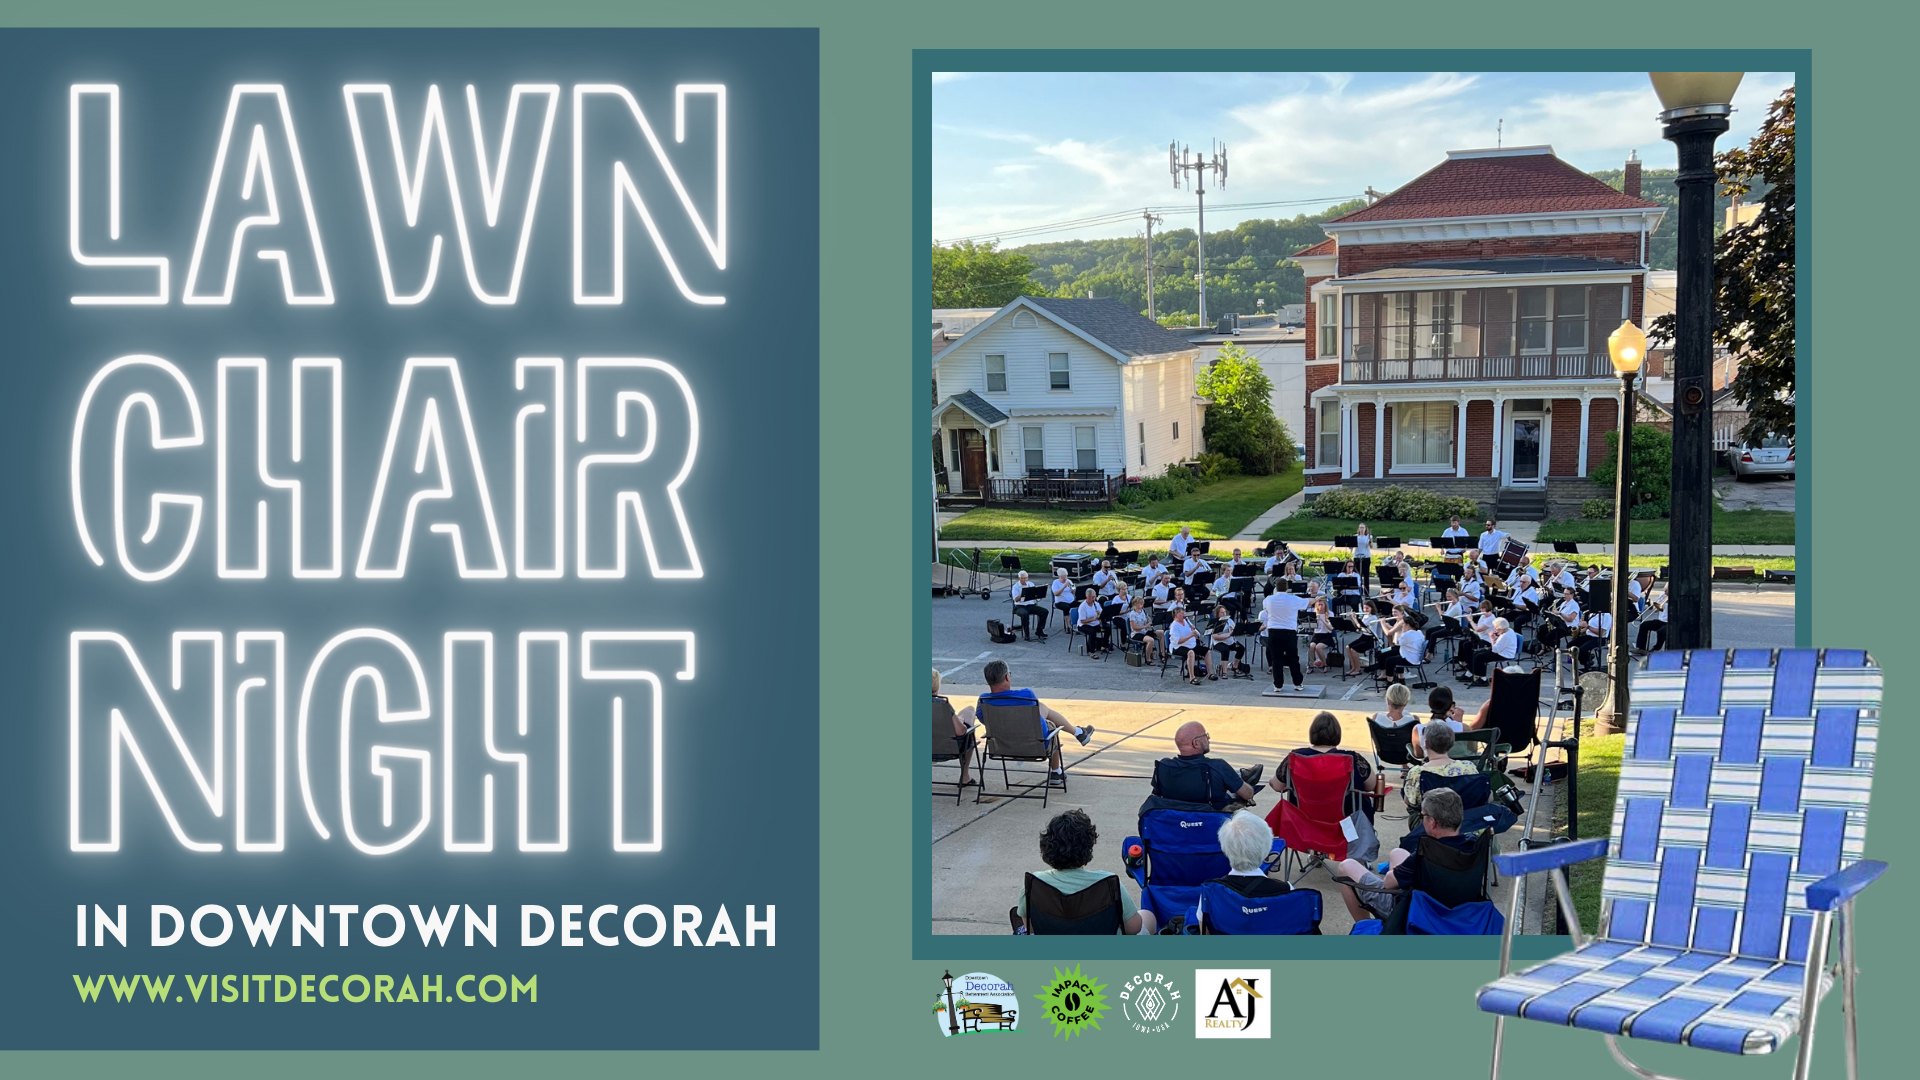 Lawn Chair Night in Downtown Decorah: Decorah Municipal Band @ Decorah High School thumbnail